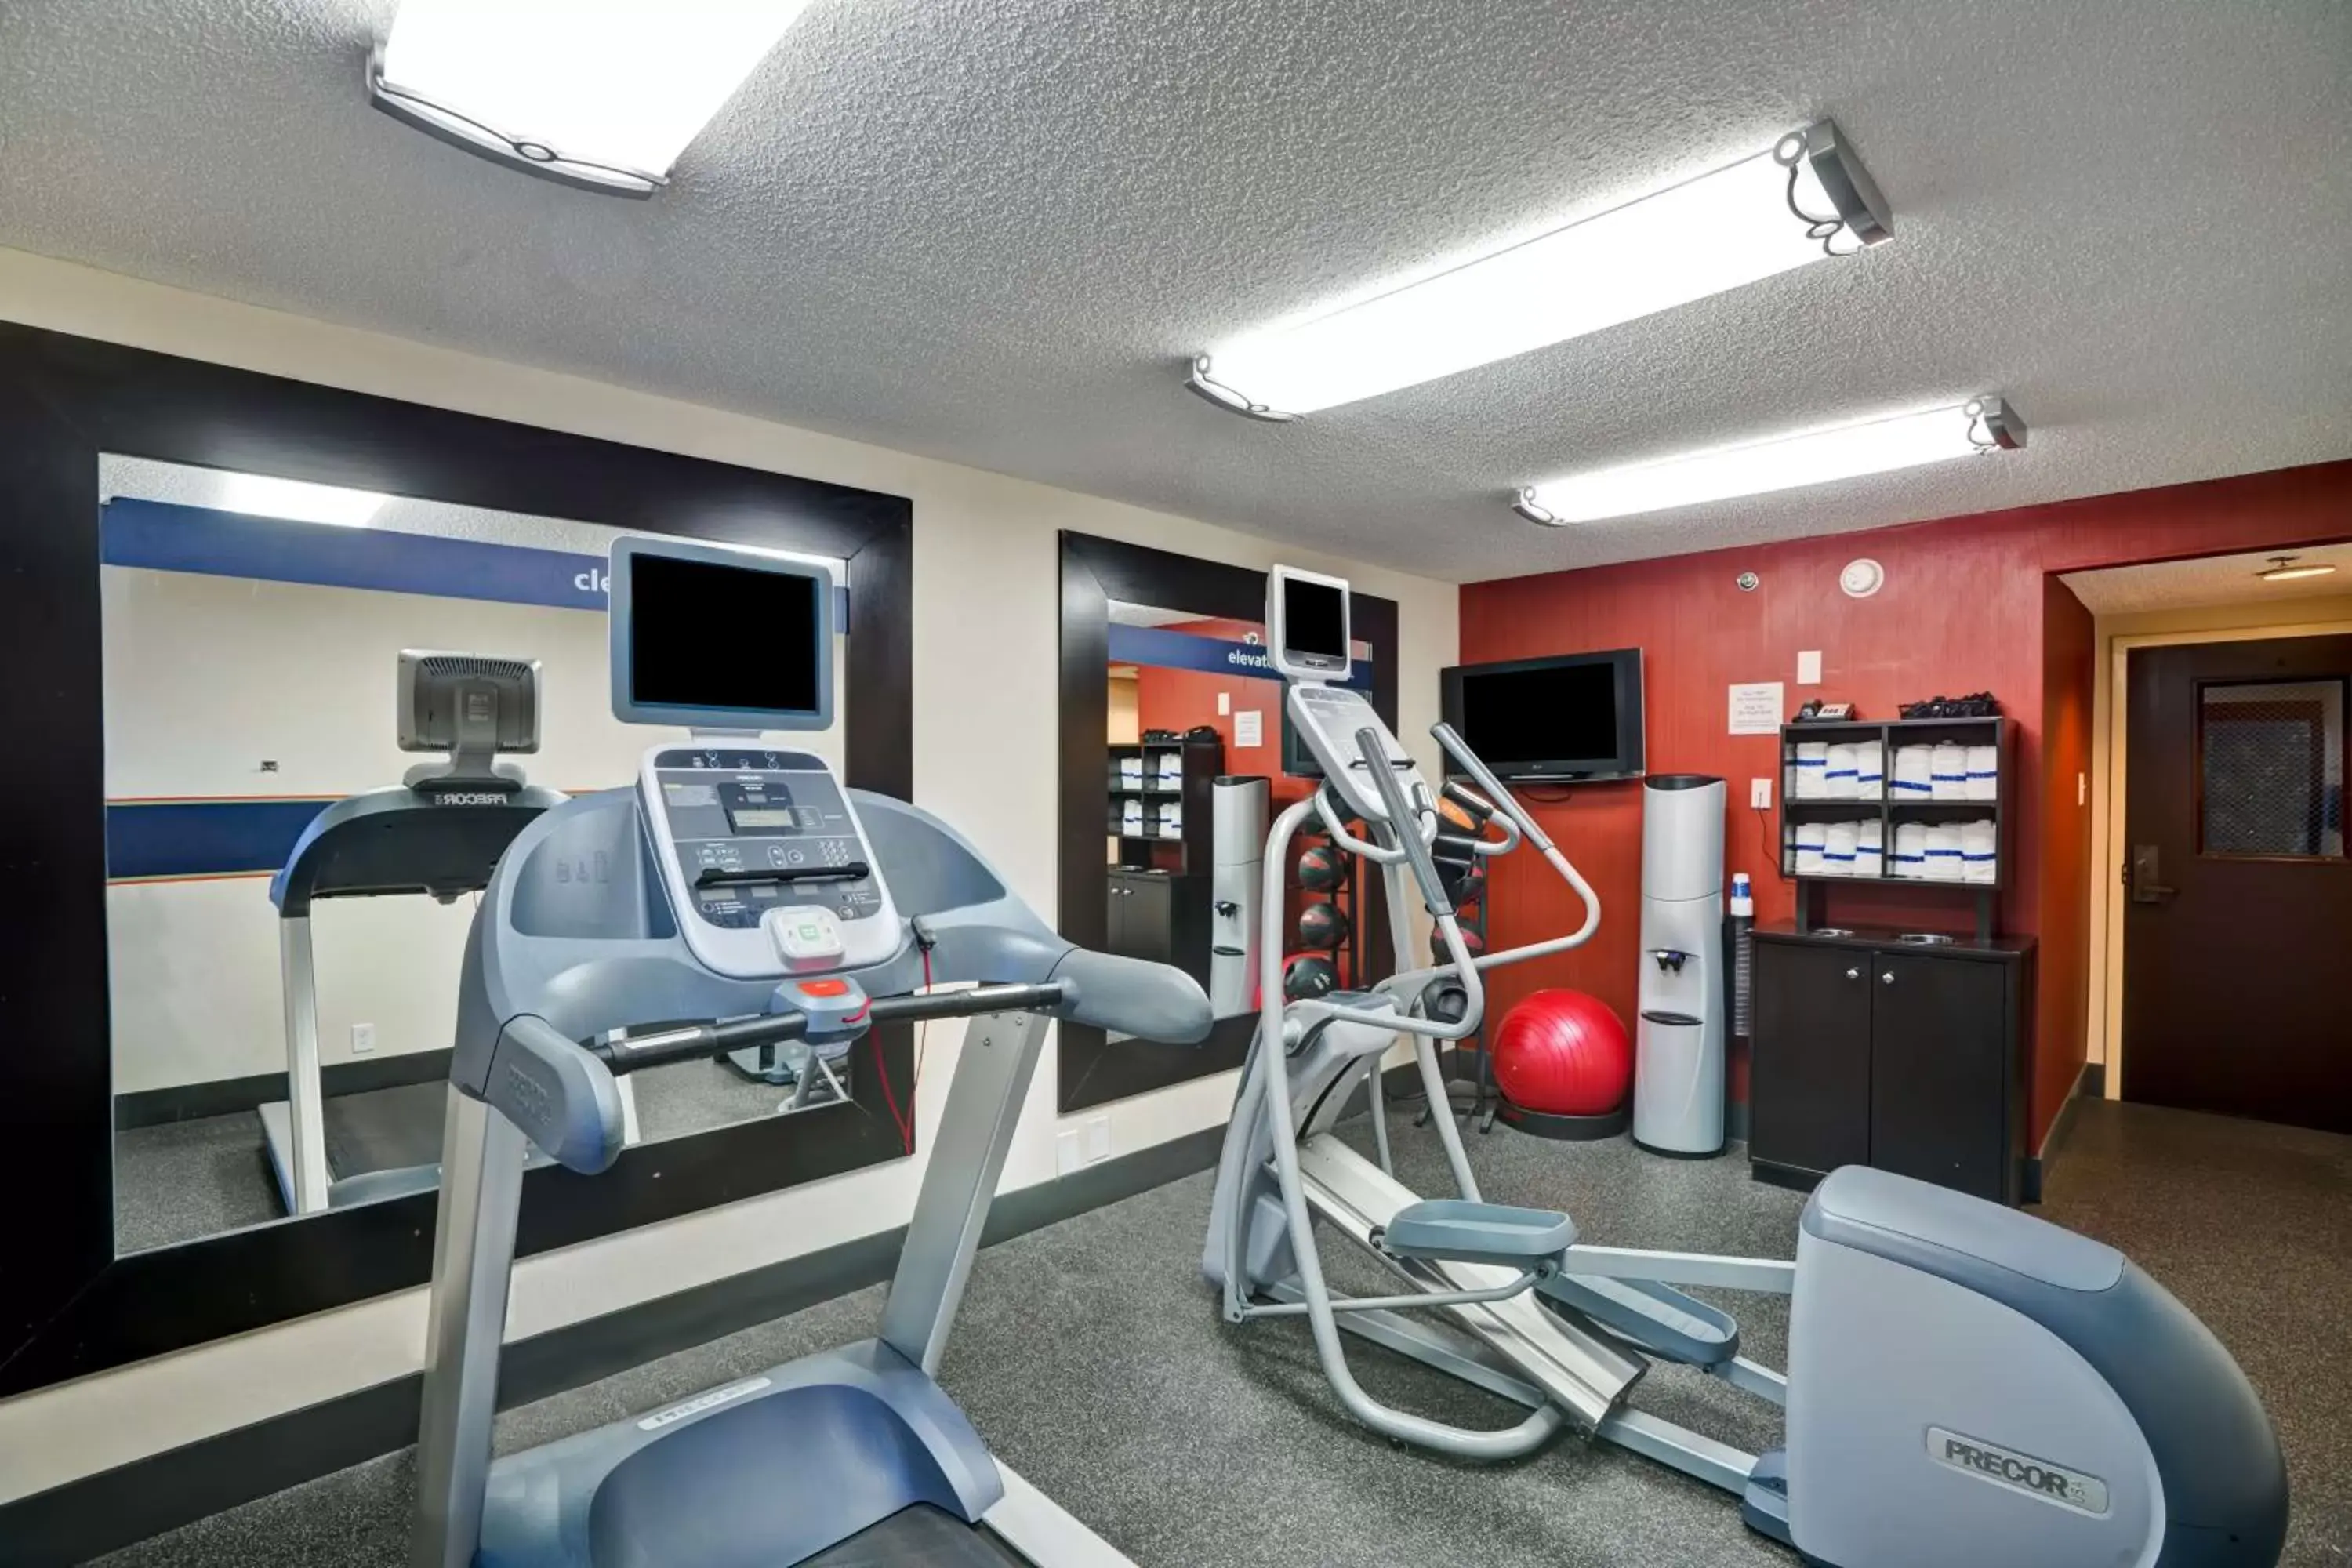 Fitness centre/facilities, Fitness Center/Facilities in Hampton Inn Birmingham/Mountain Brook